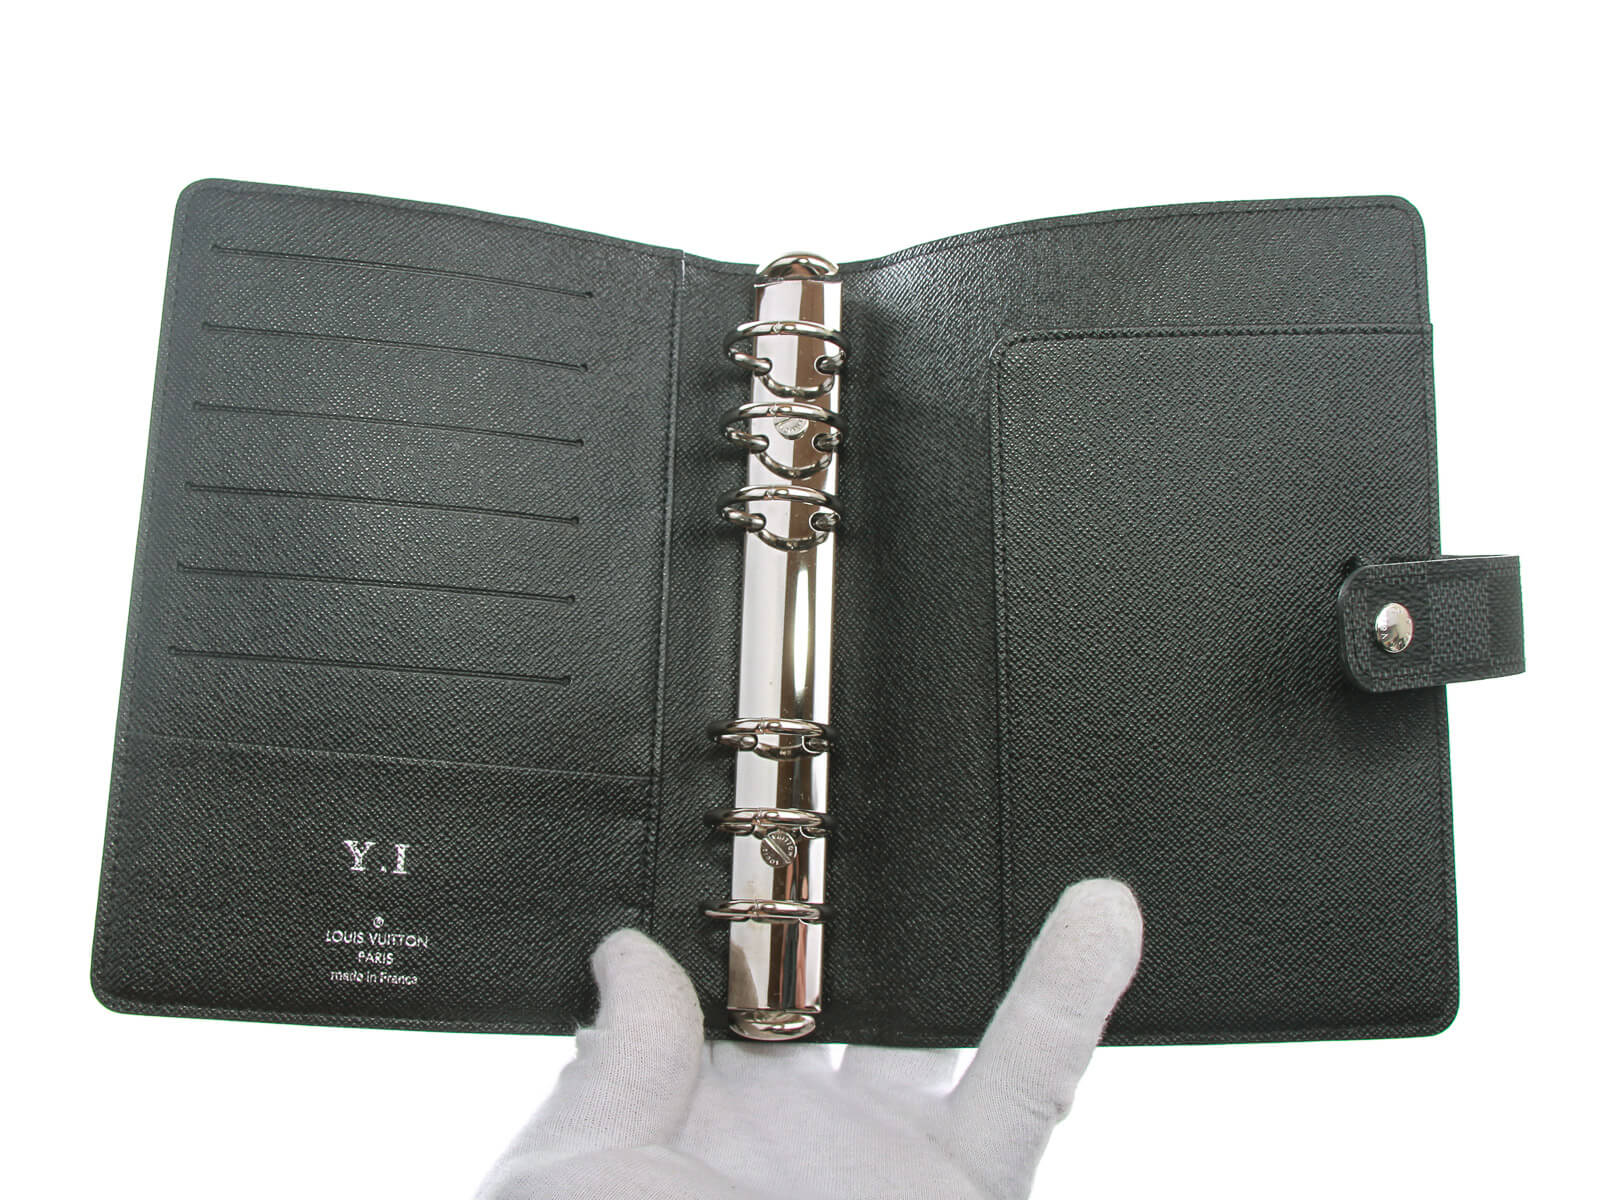 Authentic Louis Vuitton Monogram Agenda MM notebook cover | Connect Japan Luxury